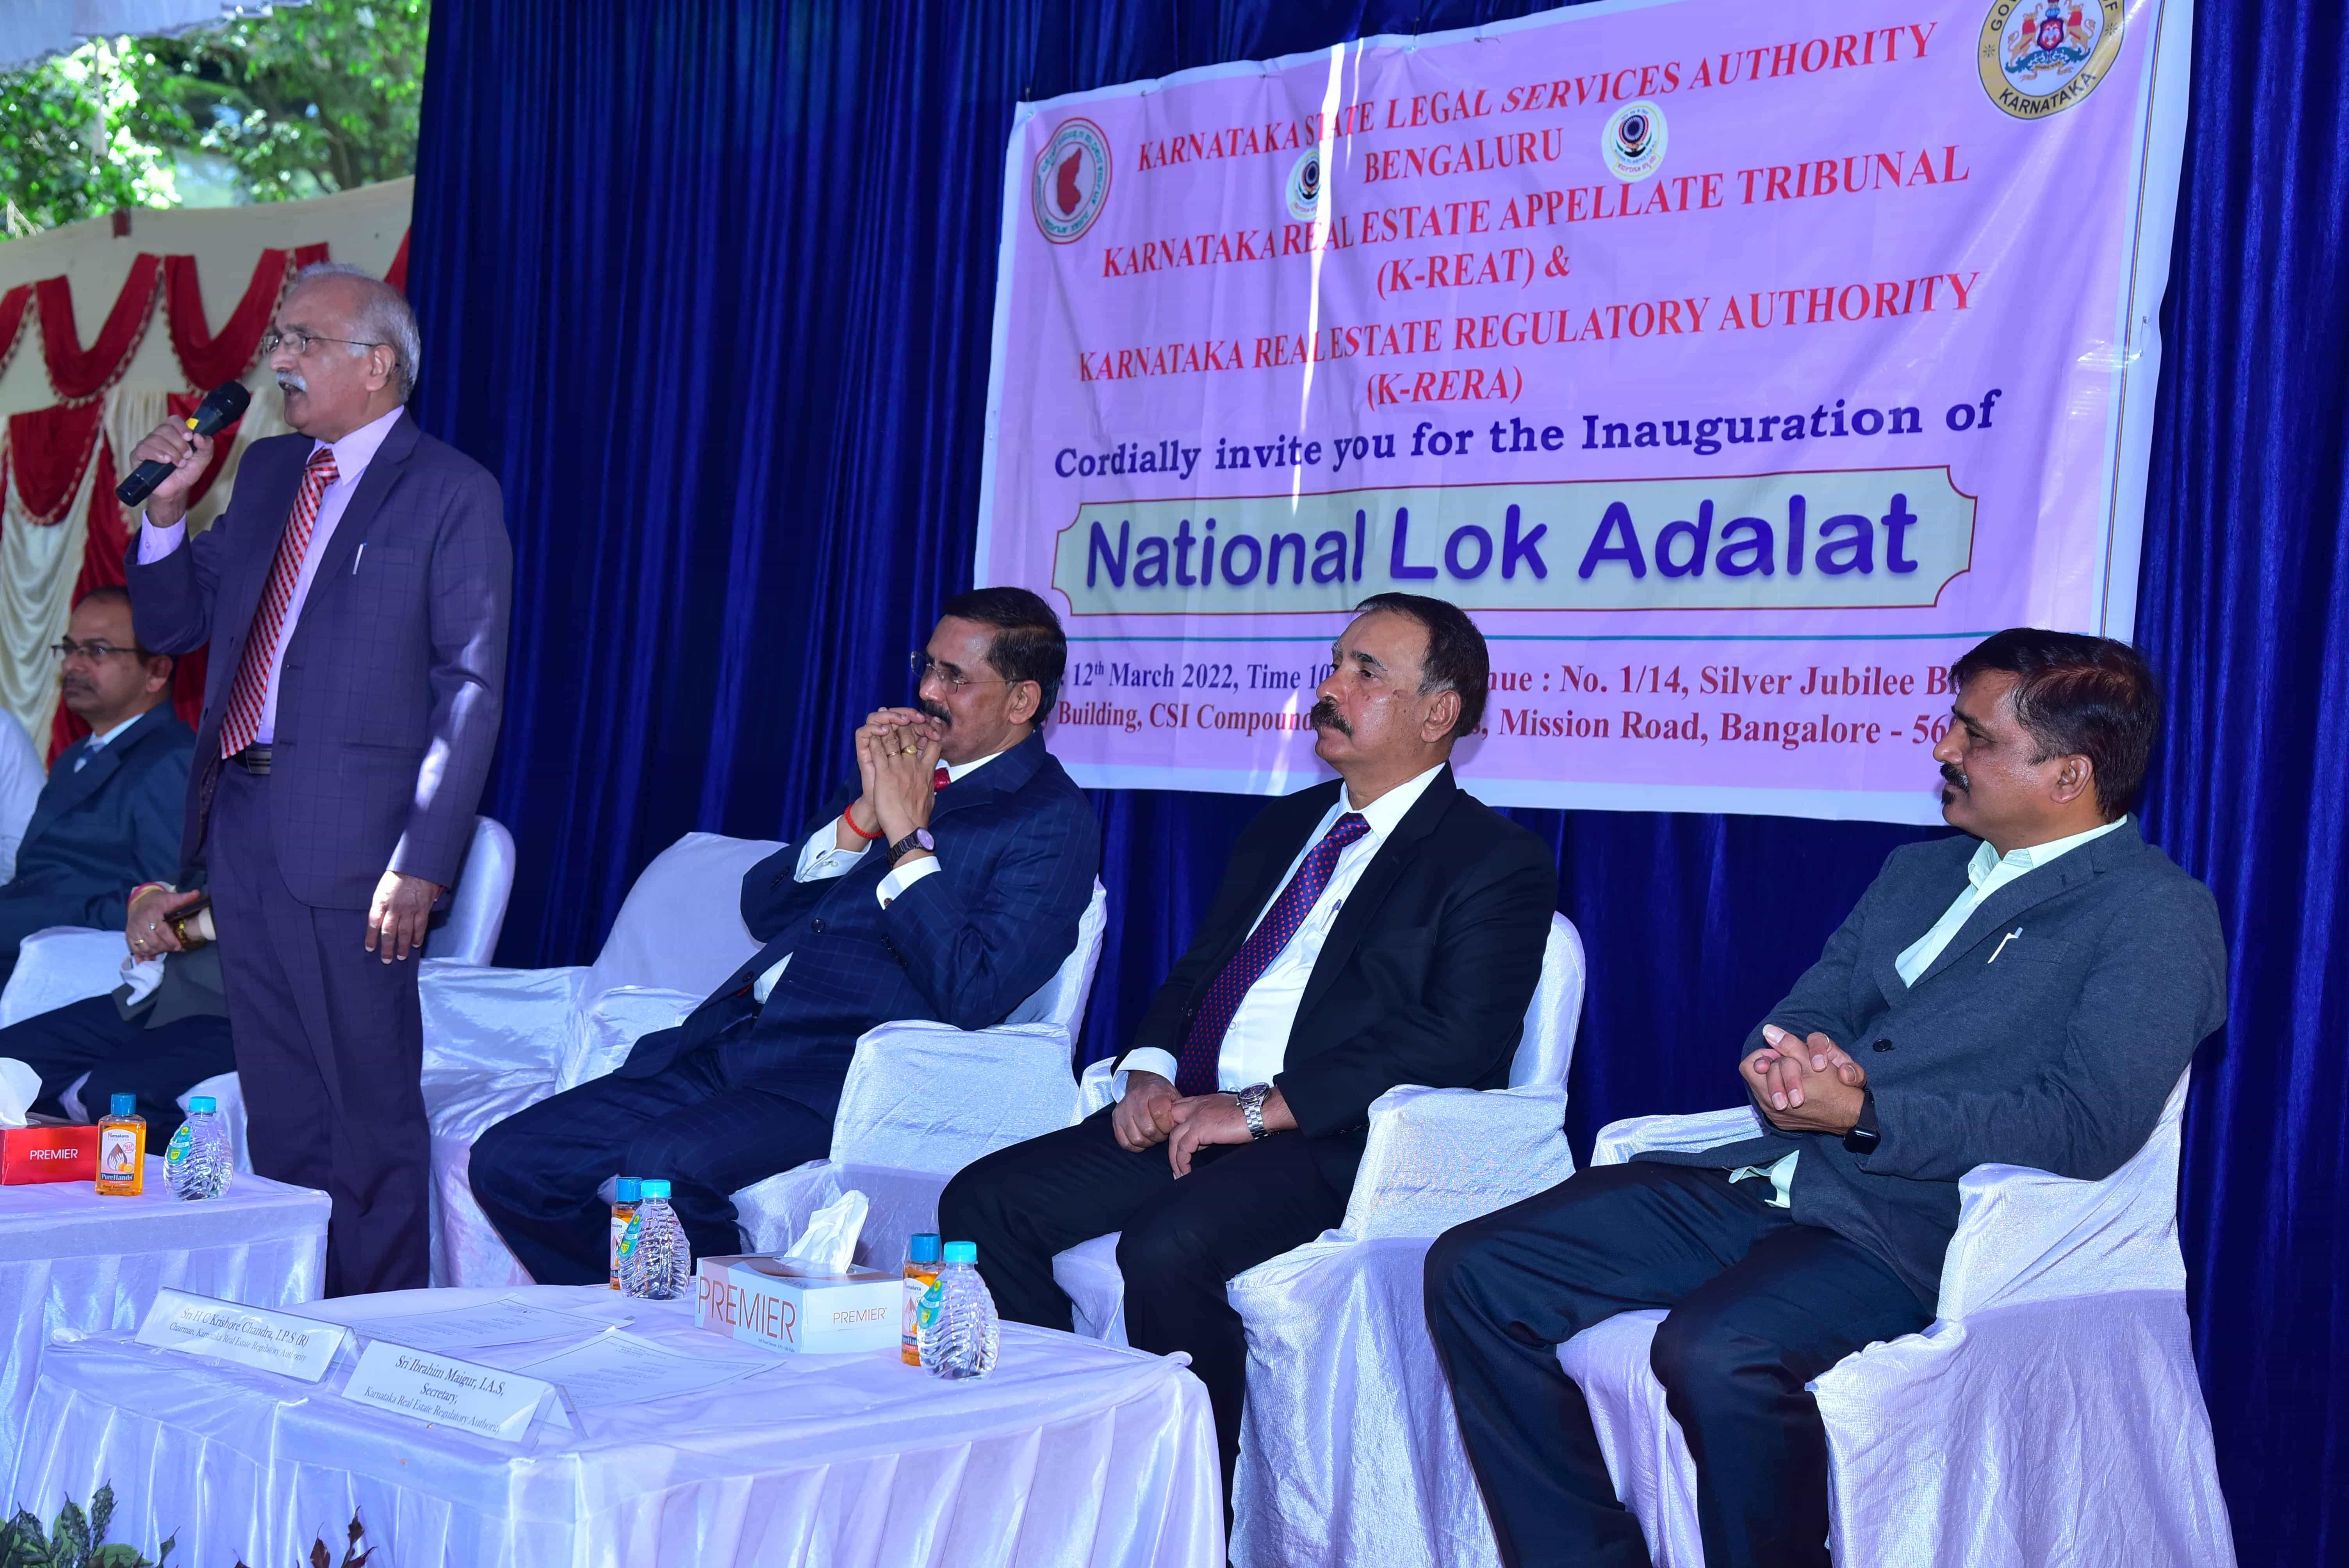 National Lok Adalat program was organized on 12/03/2022